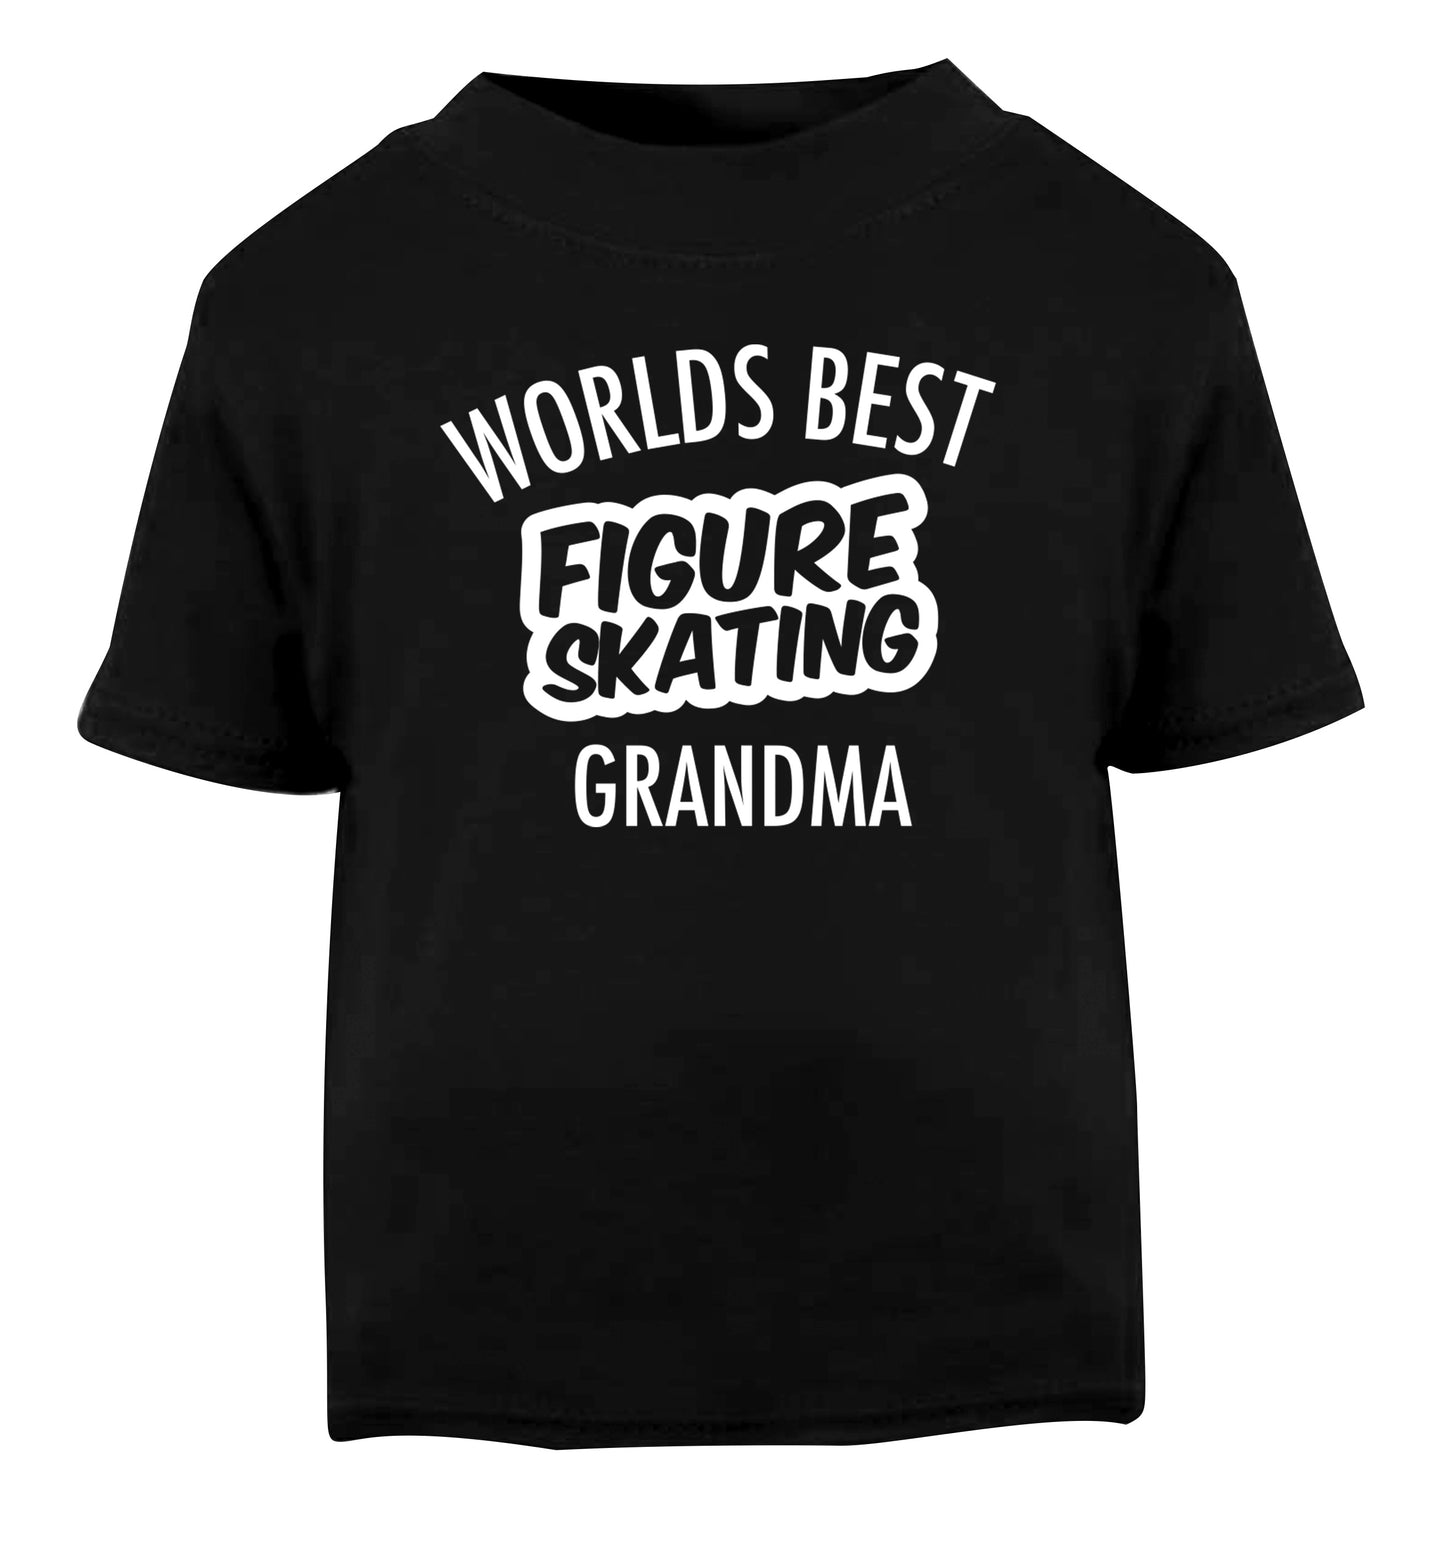 Worlds best figure skating grandma Black Baby Toddler Tshirt 2 years